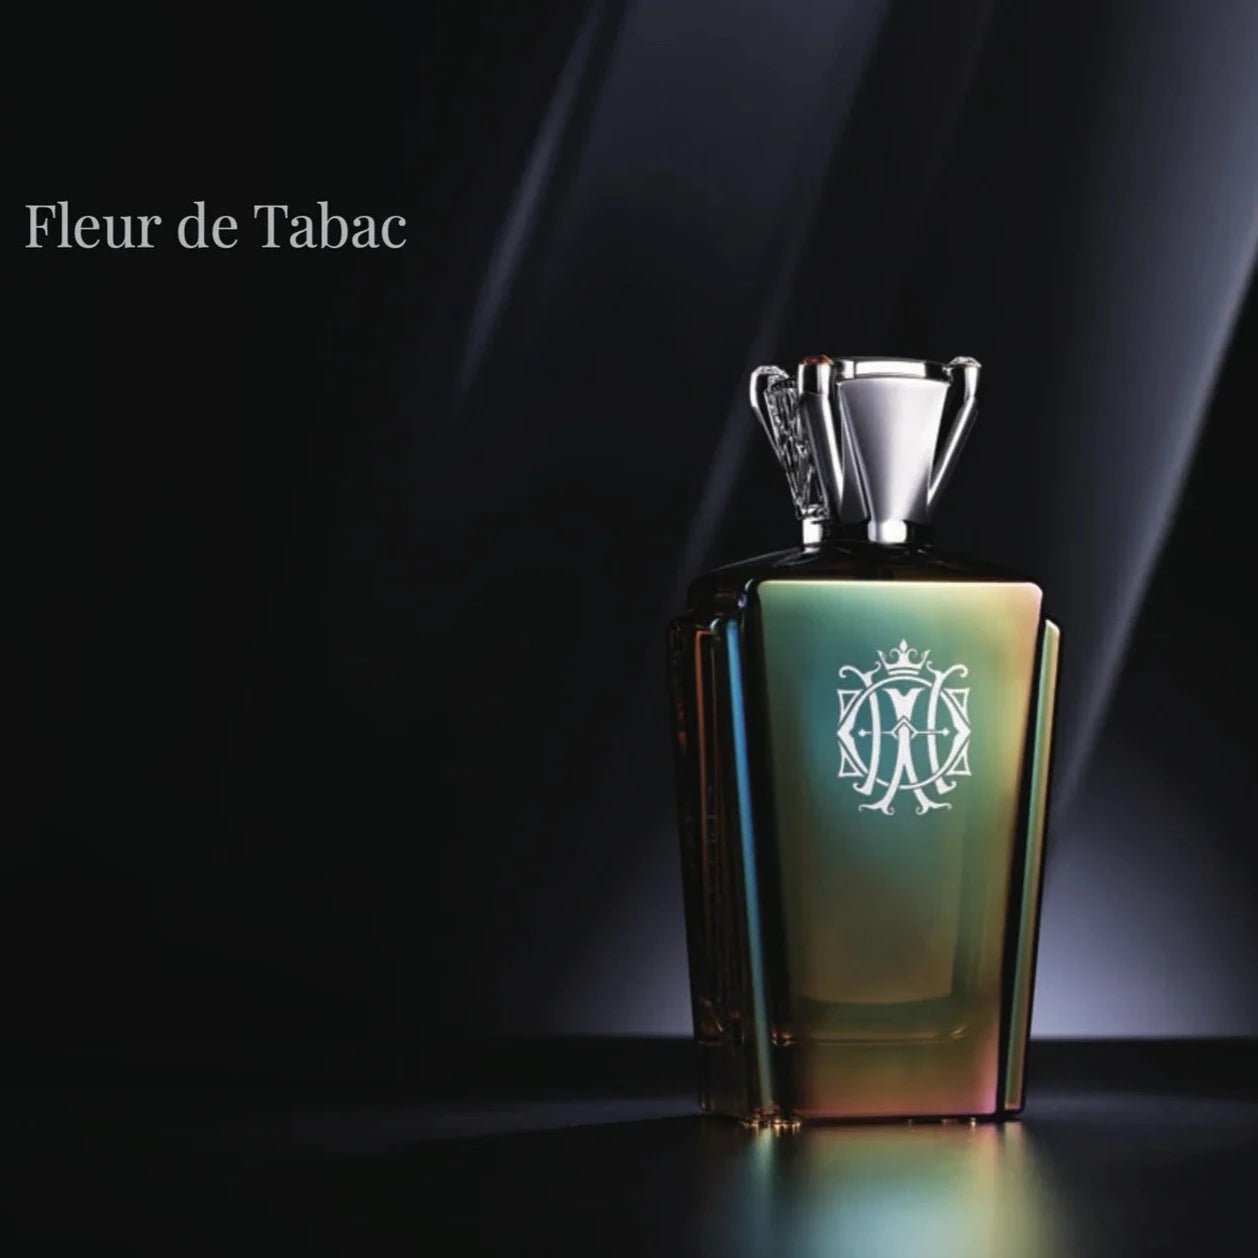 Attar Al Has Fleur De Tabac EDP | My Perfume Shop Australia